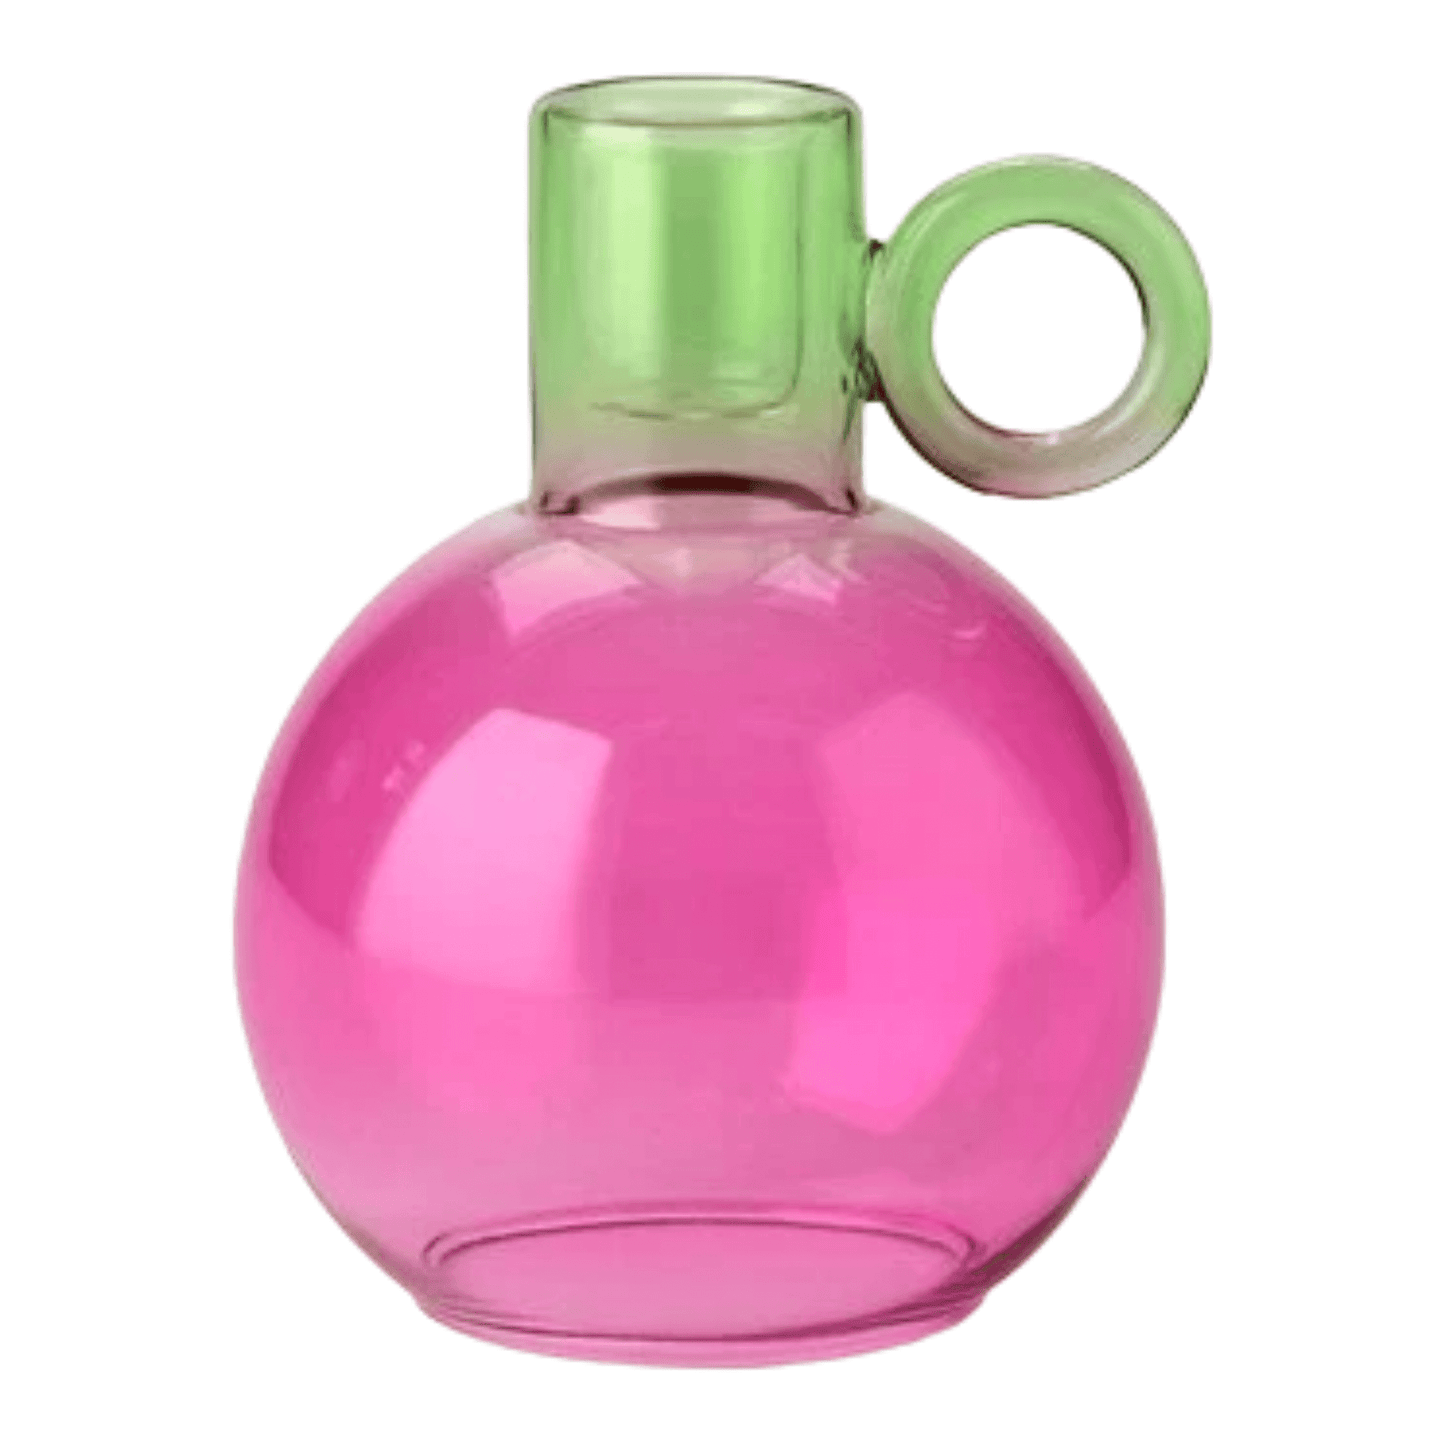 Glazen bol kandelaar roze/groen